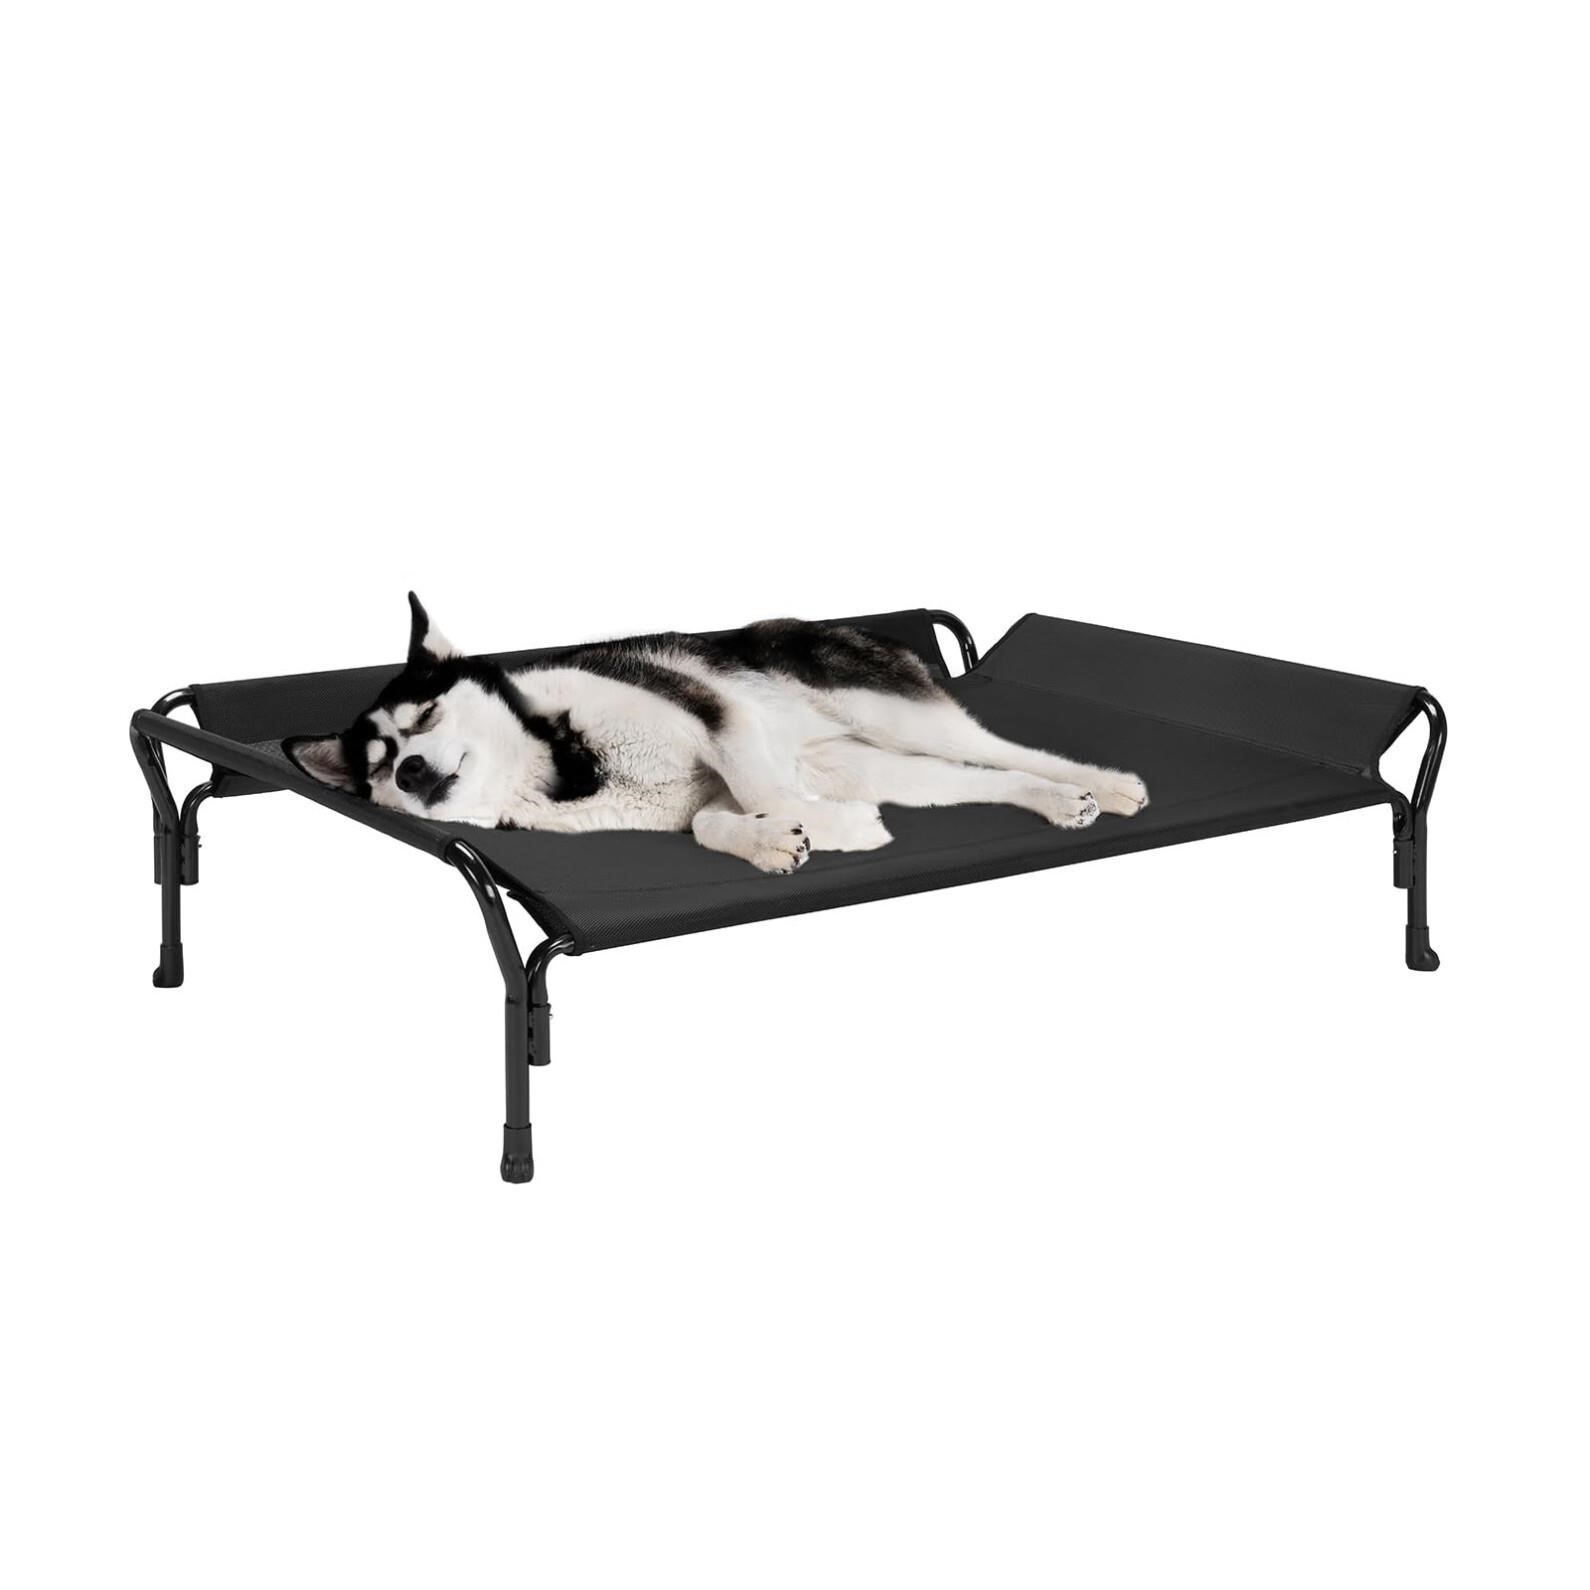 Veehoo Cooling Elevated Dog Bed, Dog Cots Beds for